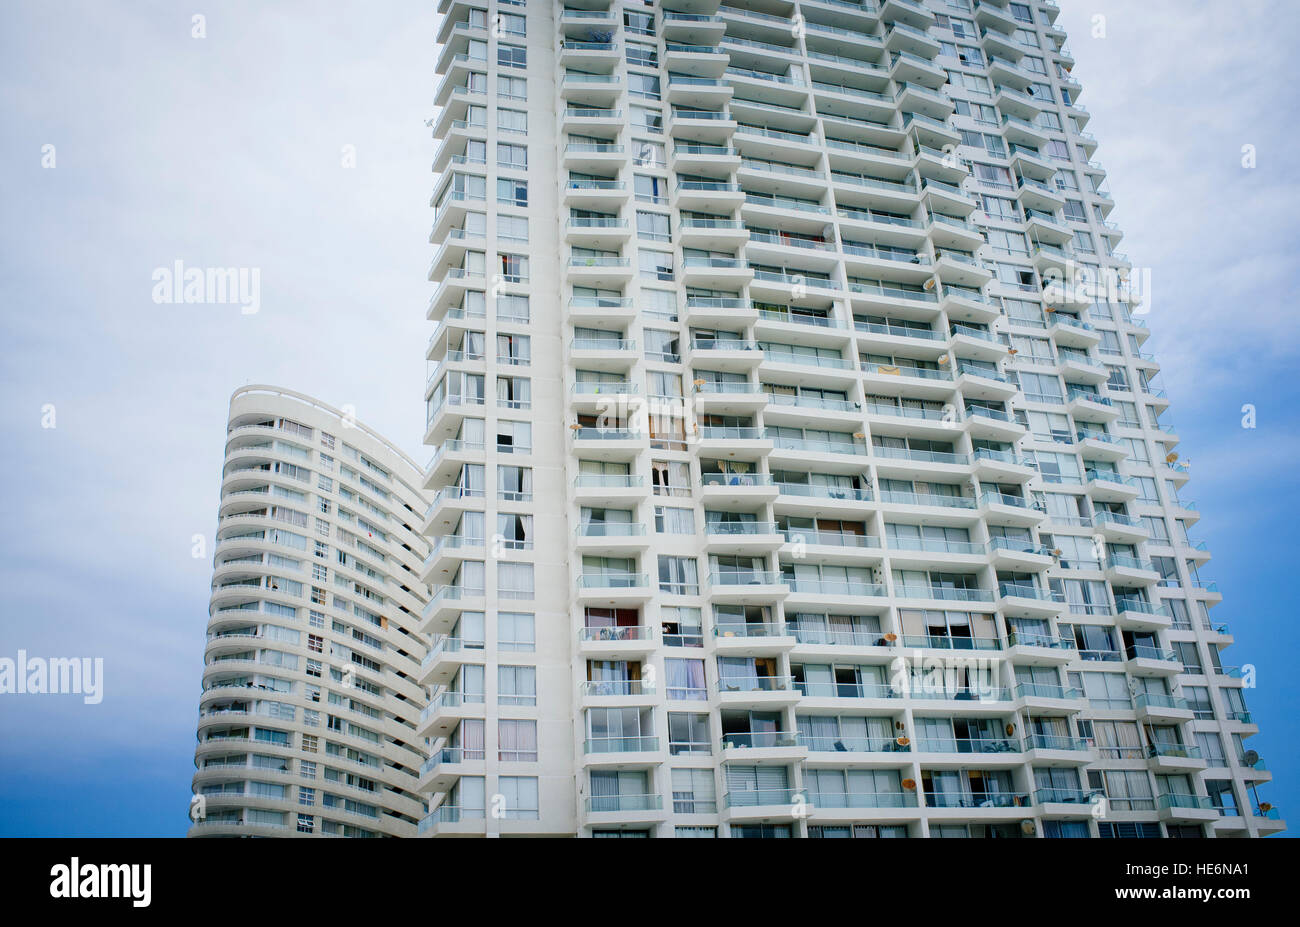 High density apartment building Stock Photo